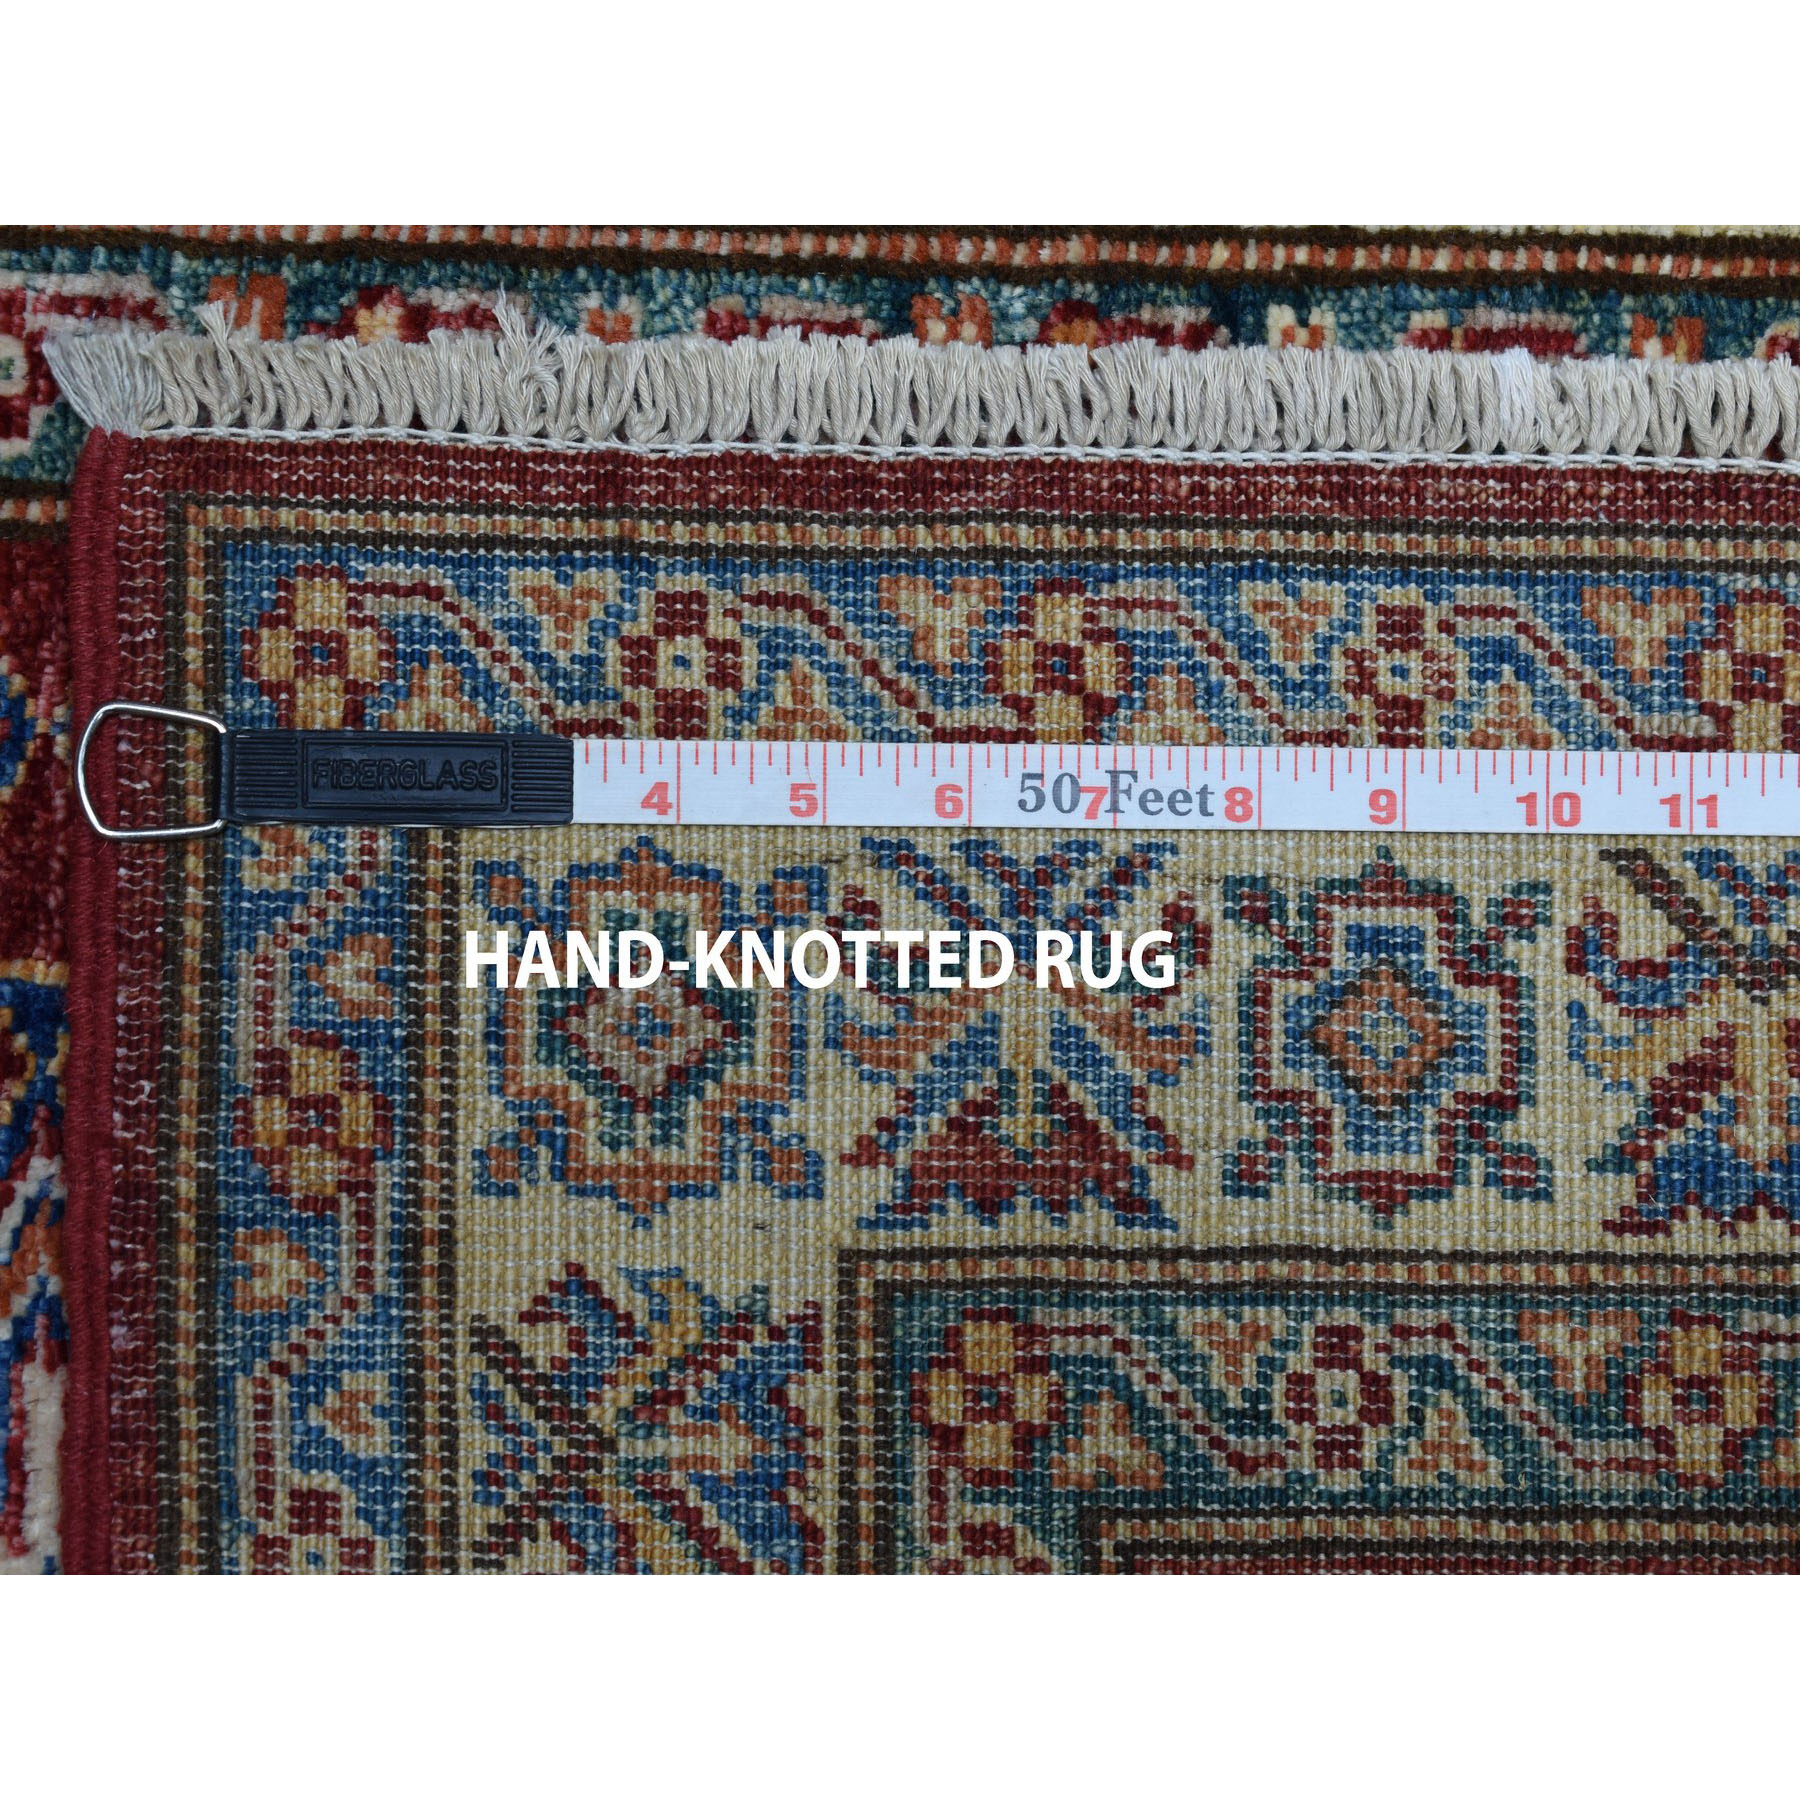 2-6 x4- Red Super Kazak Pure Wool Geometric Design Hand-Knotted Oriental Rug 